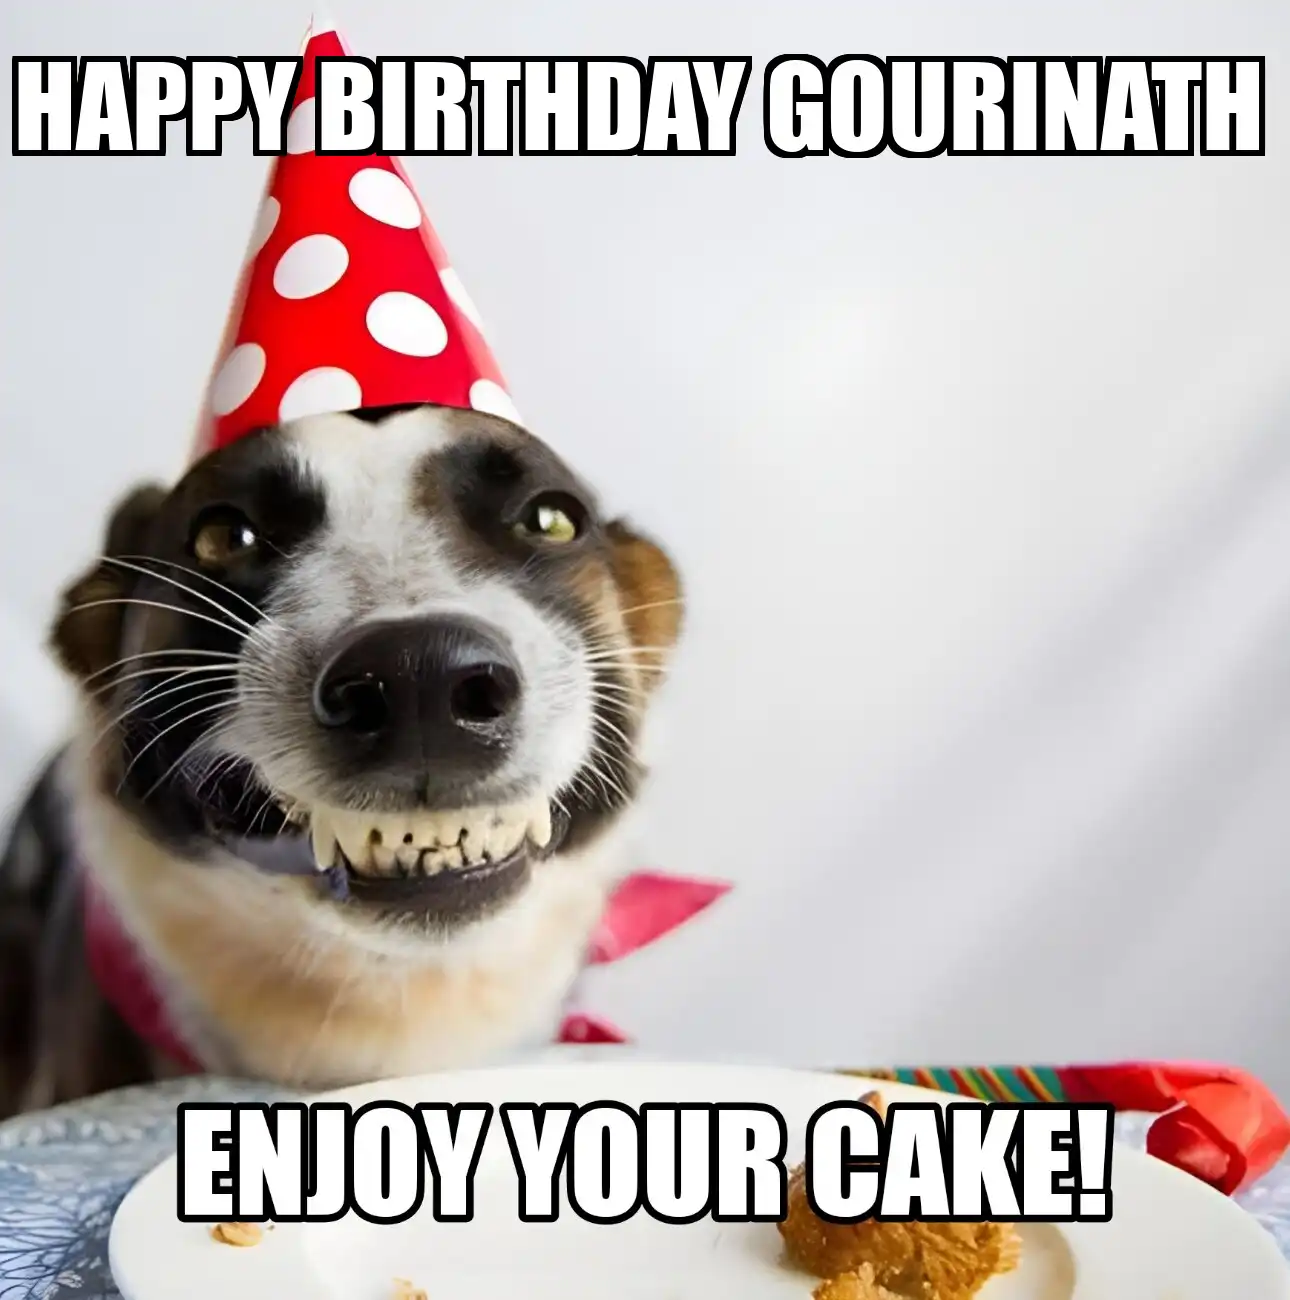 Happy Birthday Gourinath Enjoy Your Cake Dog Meme